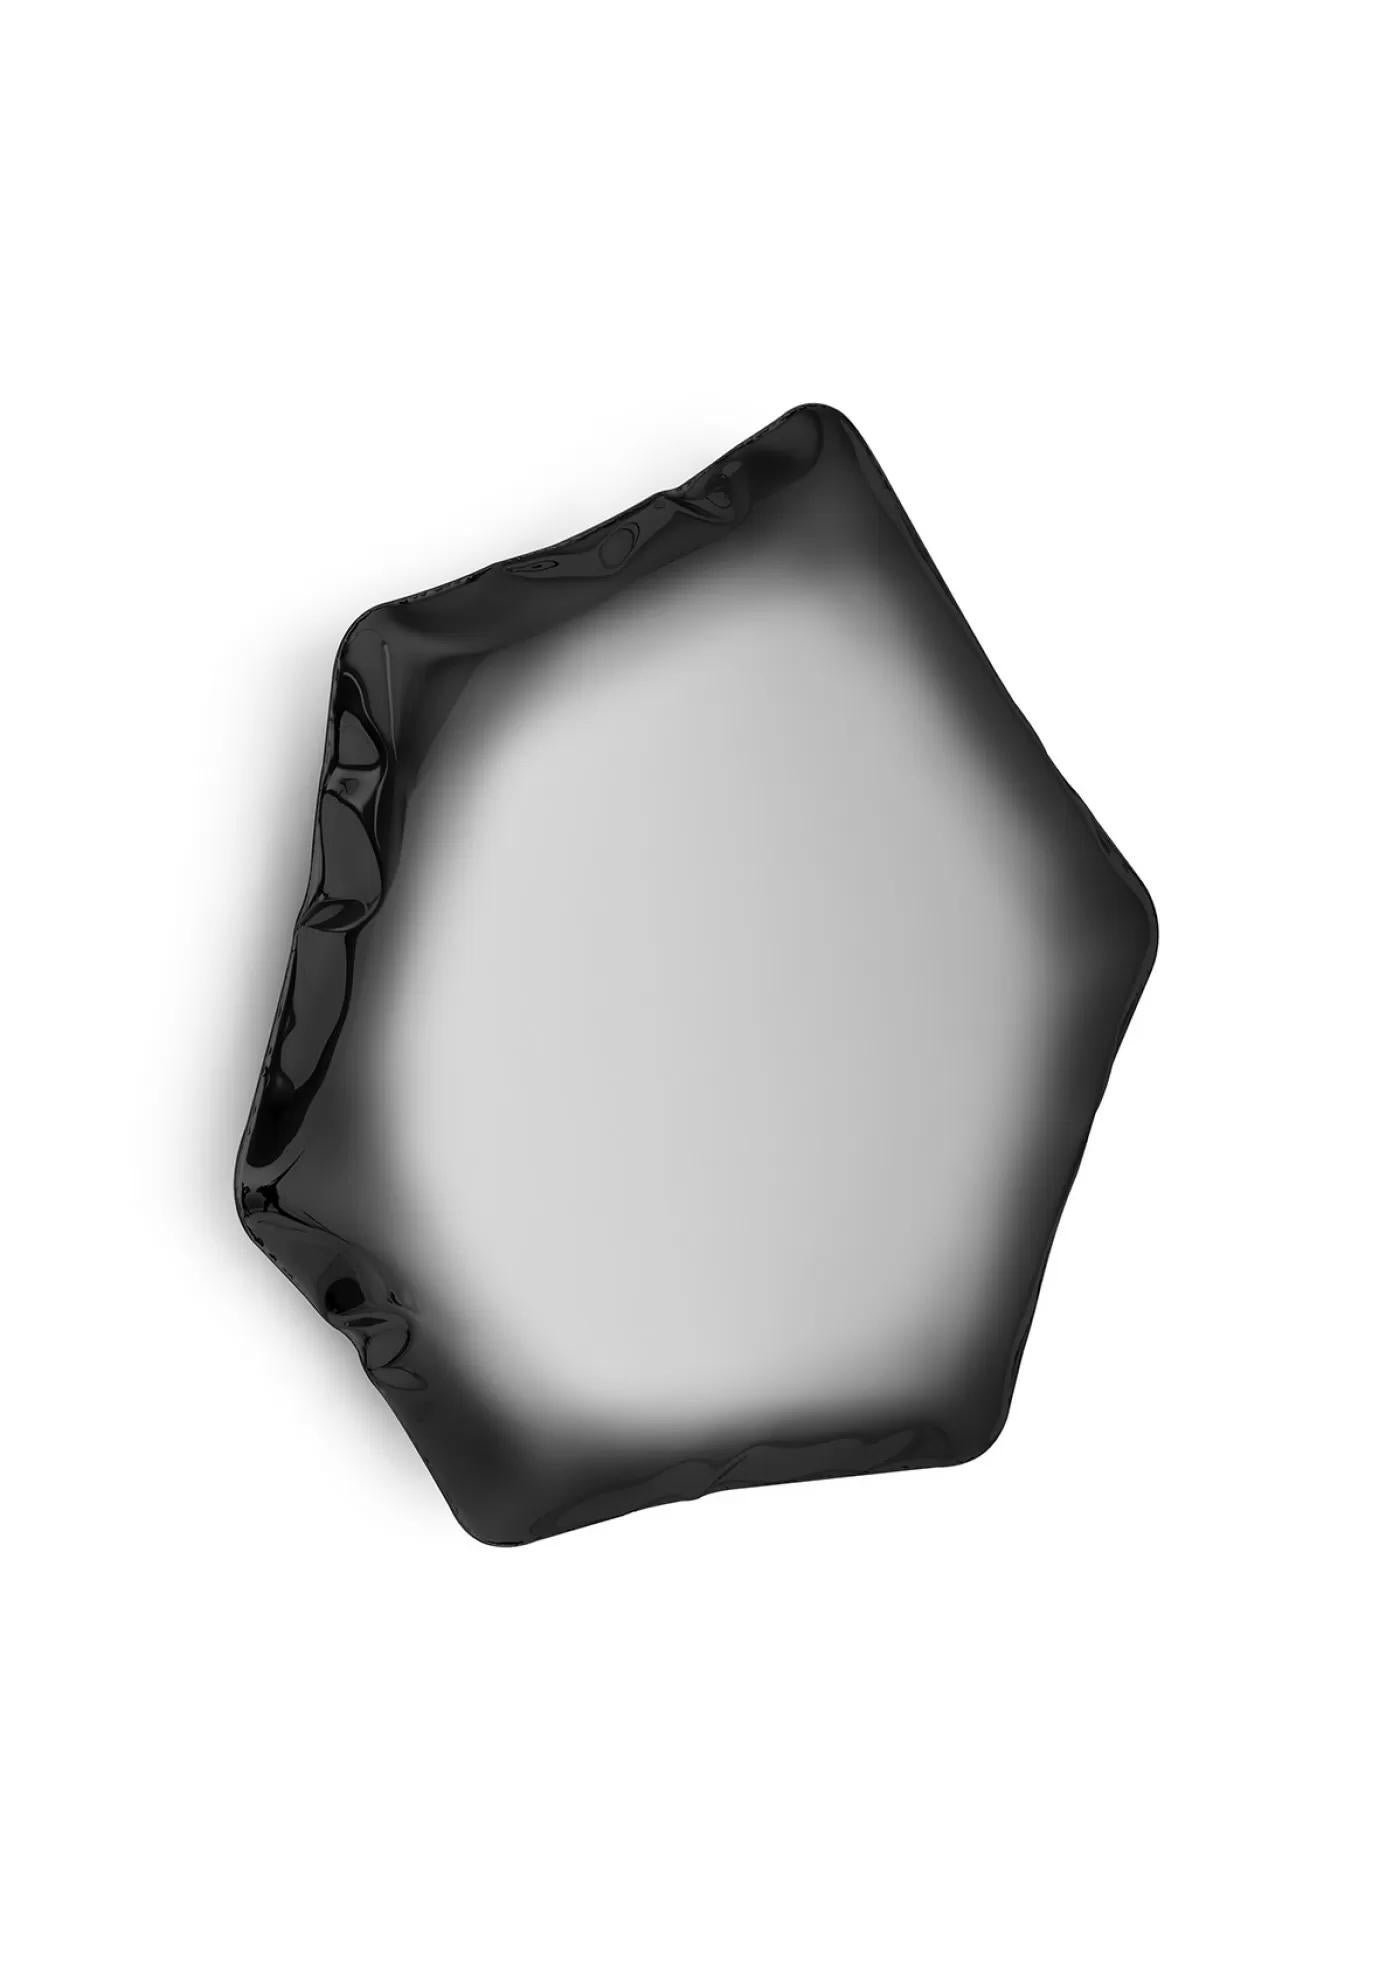 Organic Modern Contemporary Mirror 'Tafla C6' by Zieta, Transitions Collection, Dark Matter For Sale